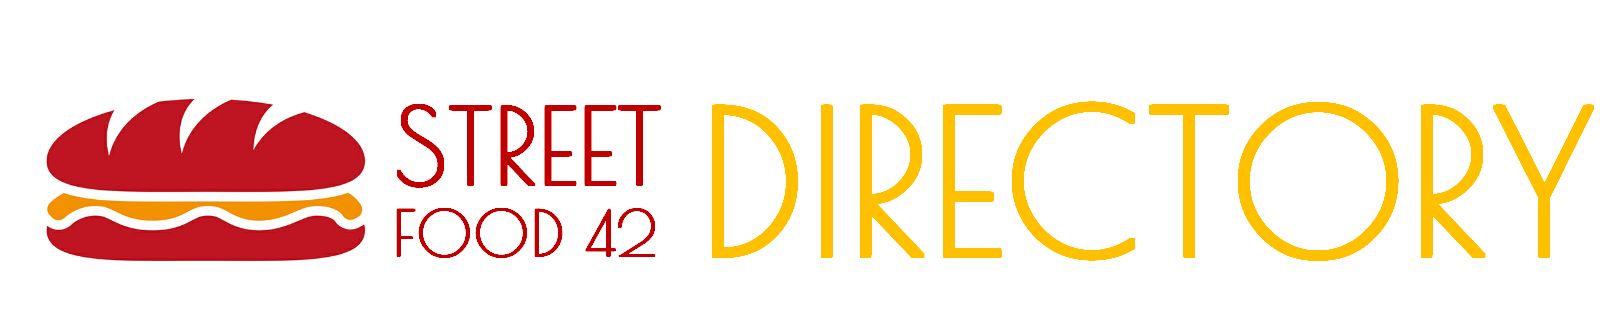 StreetFood42 Directory logo